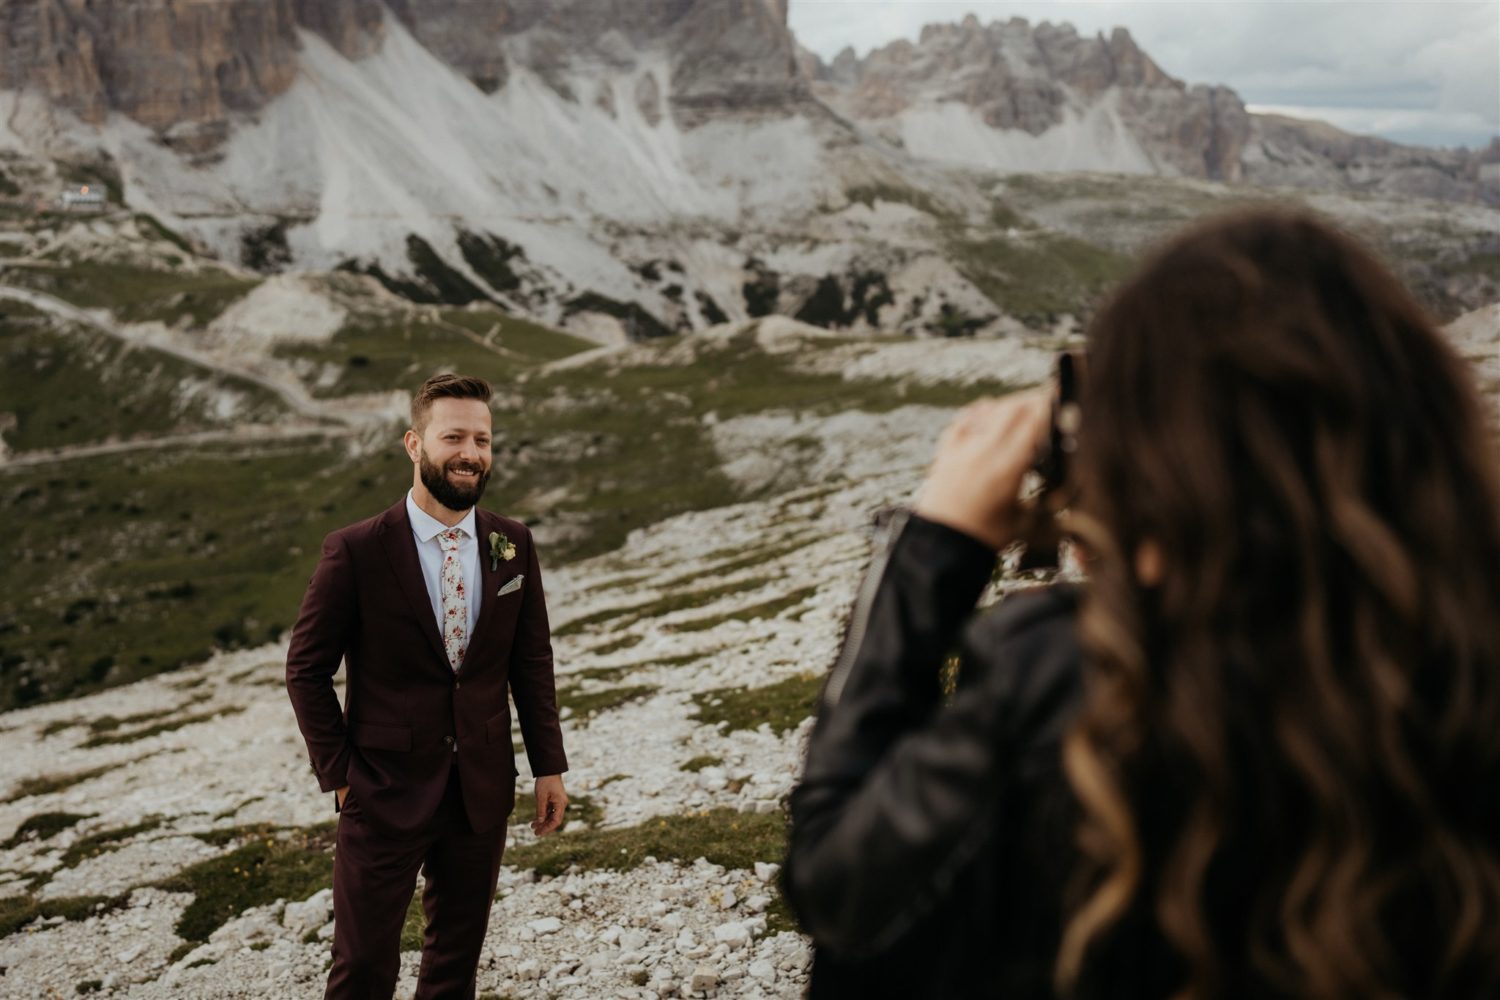 Destination wedding photographer takes photos of groom while in wedding dress